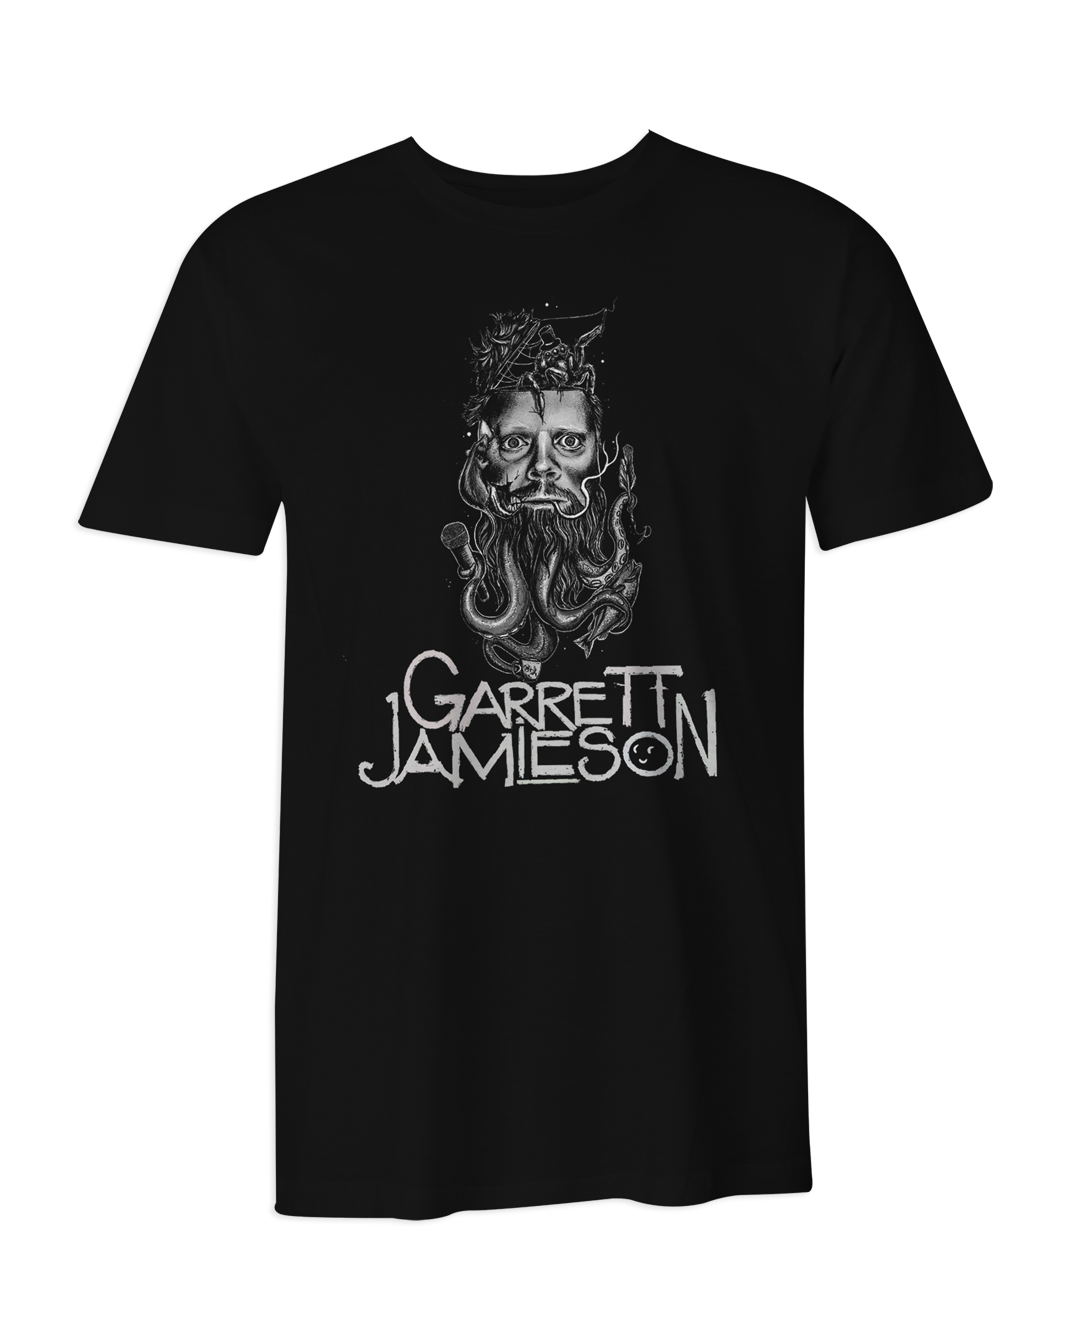 Garrett’s T-Shirt